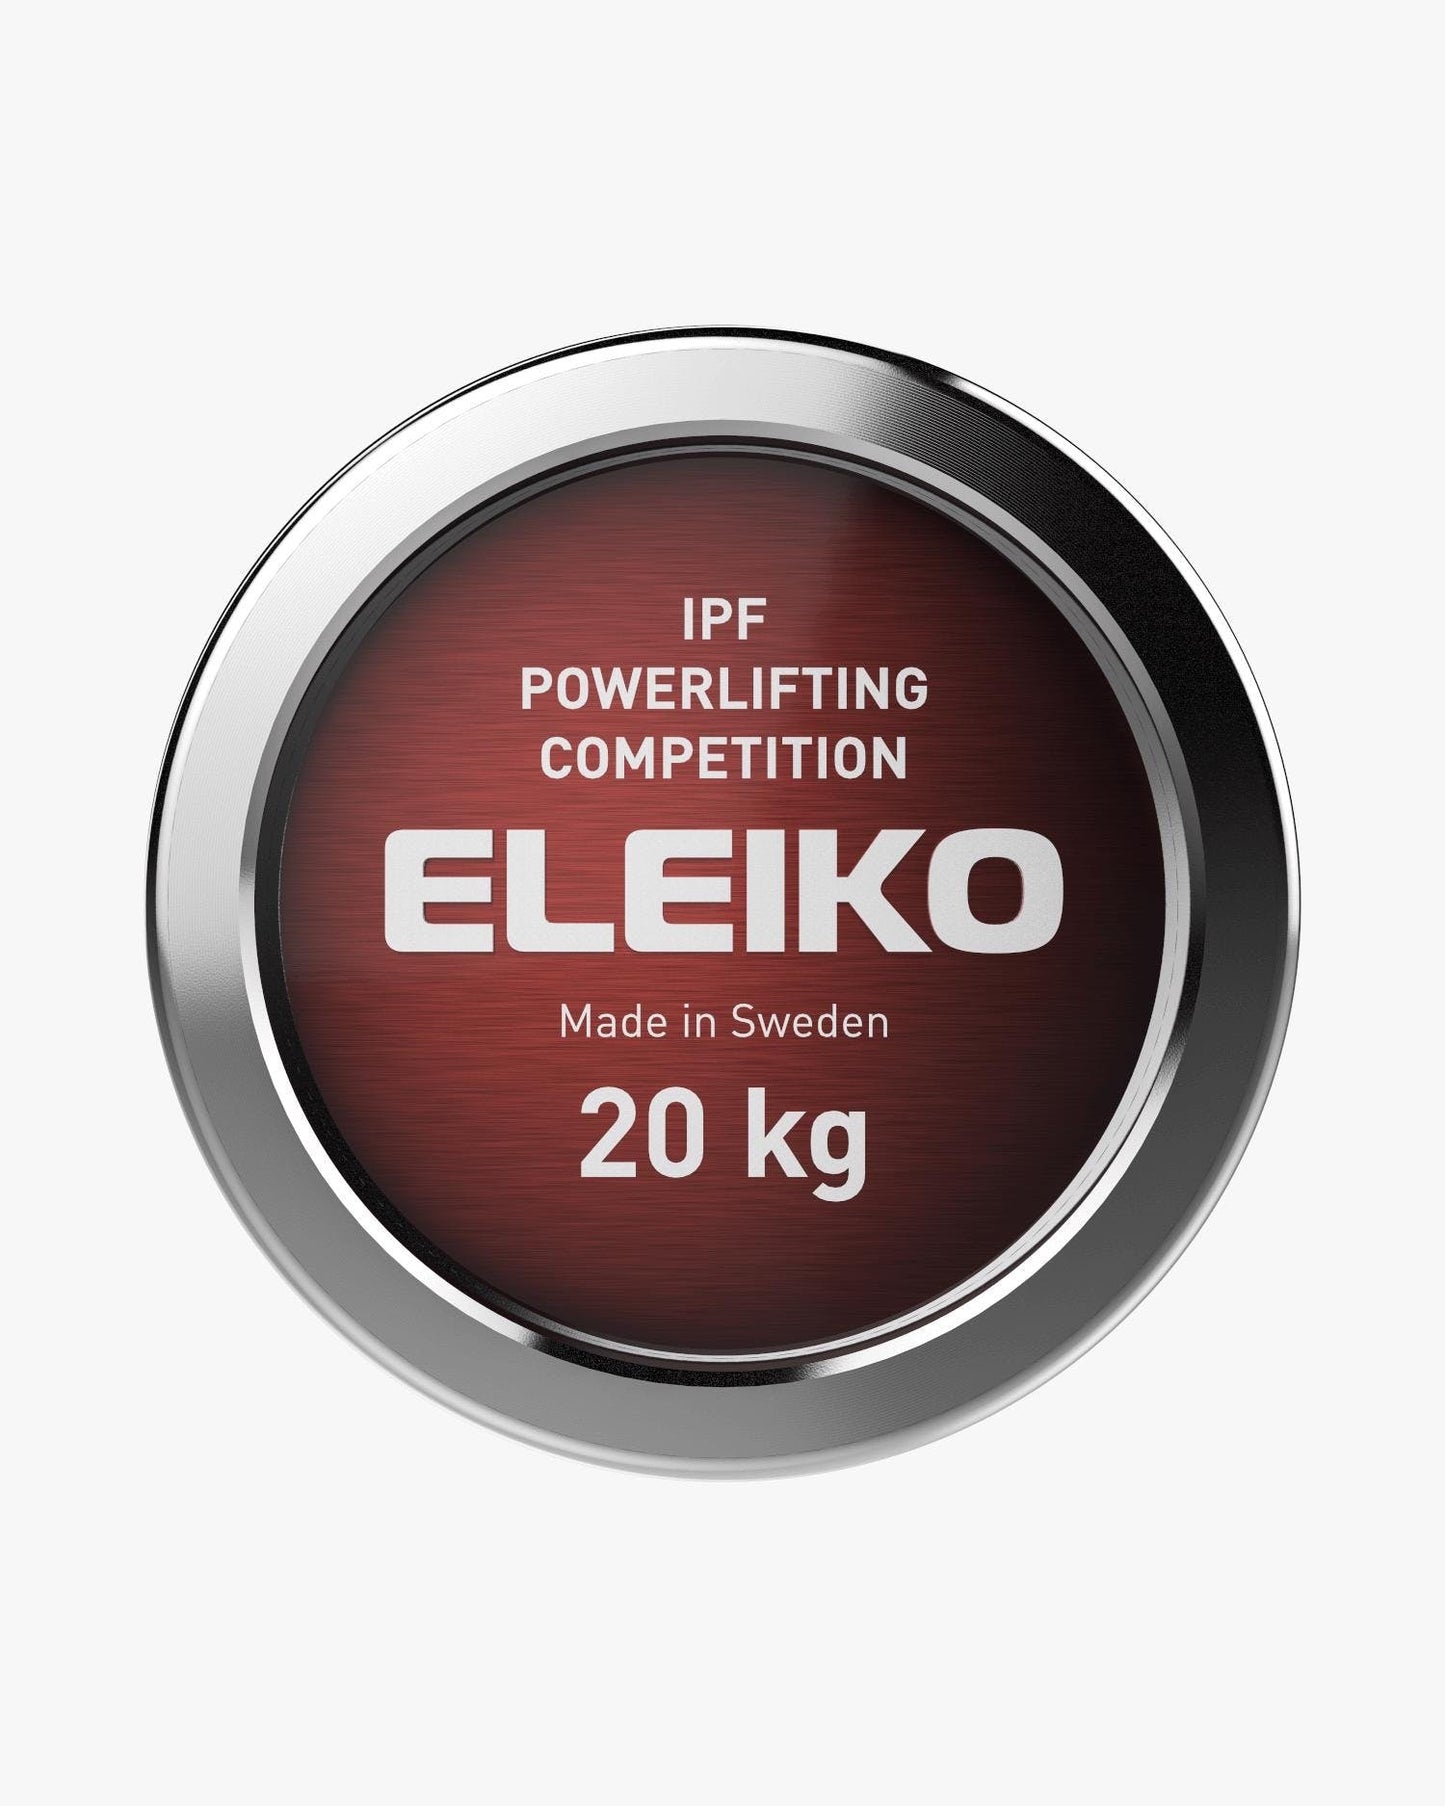 Eleiko IPF Powerlifting Competition Bar